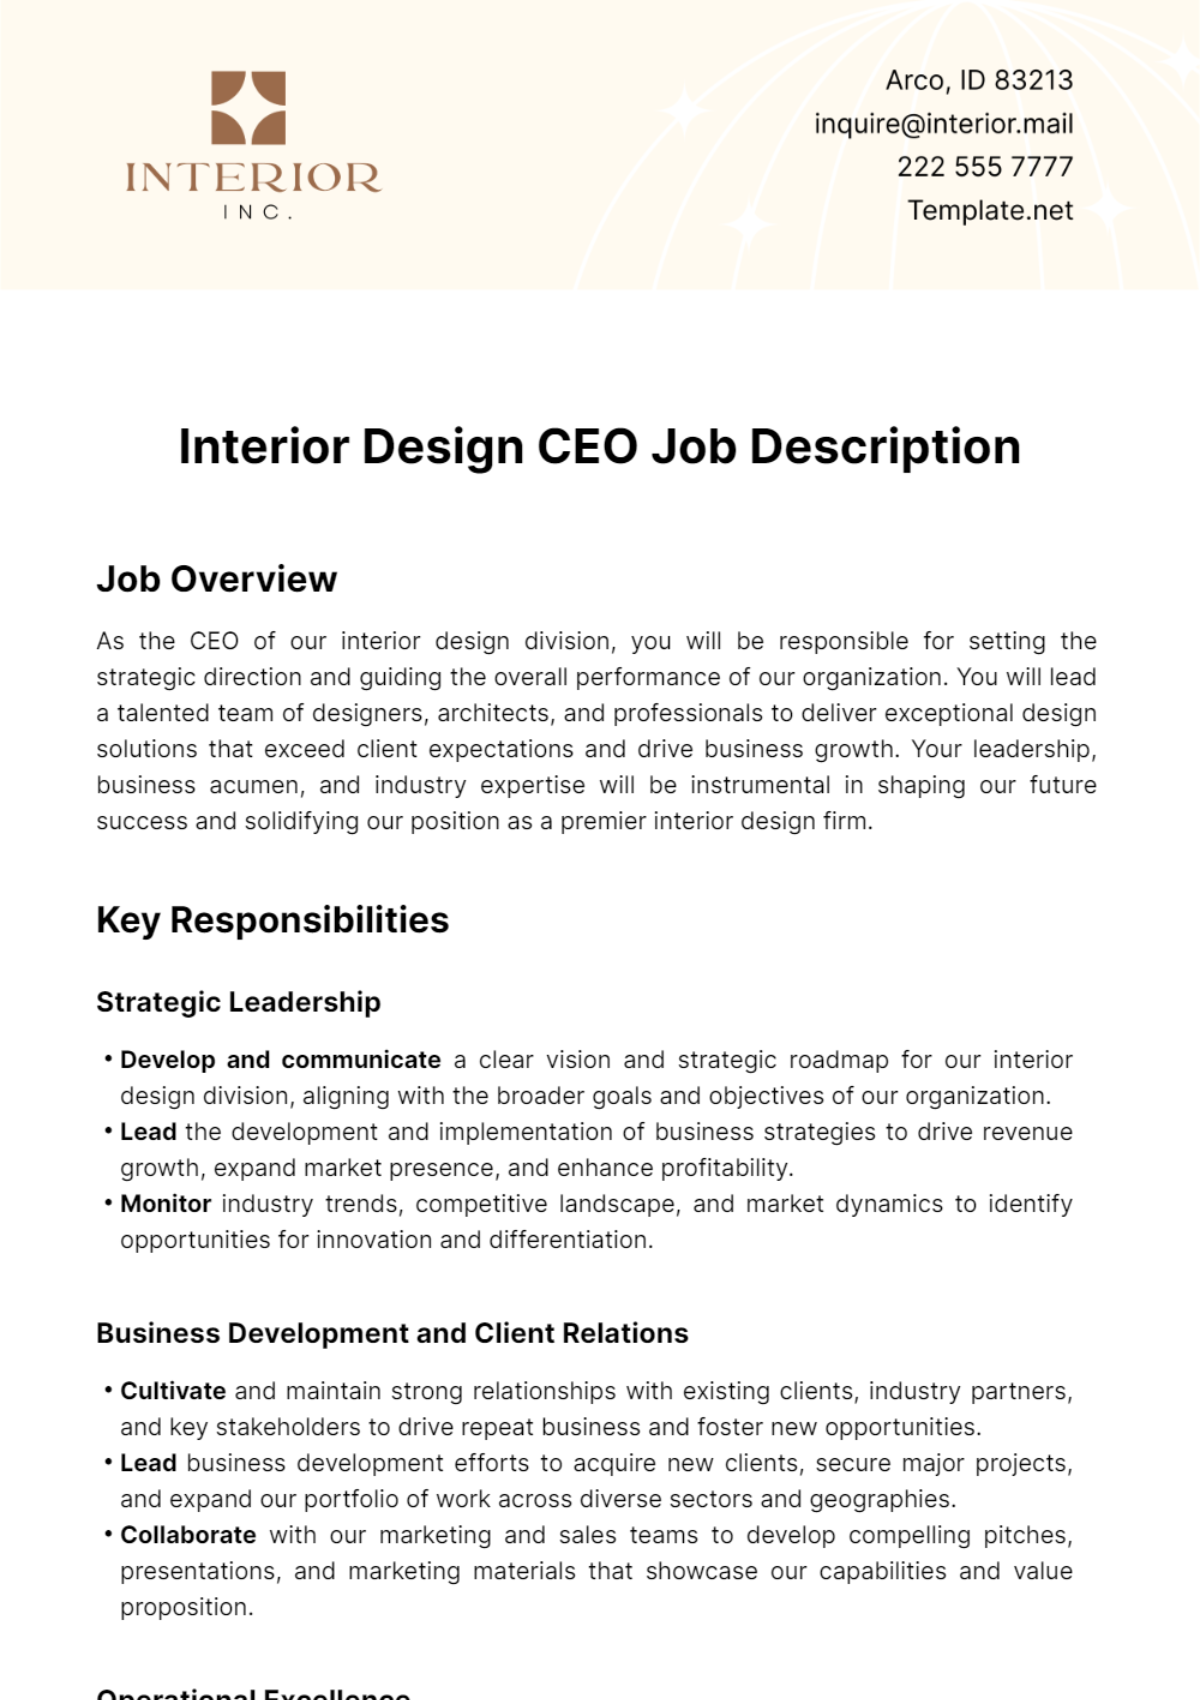 Interior Design CEO Job Description Template